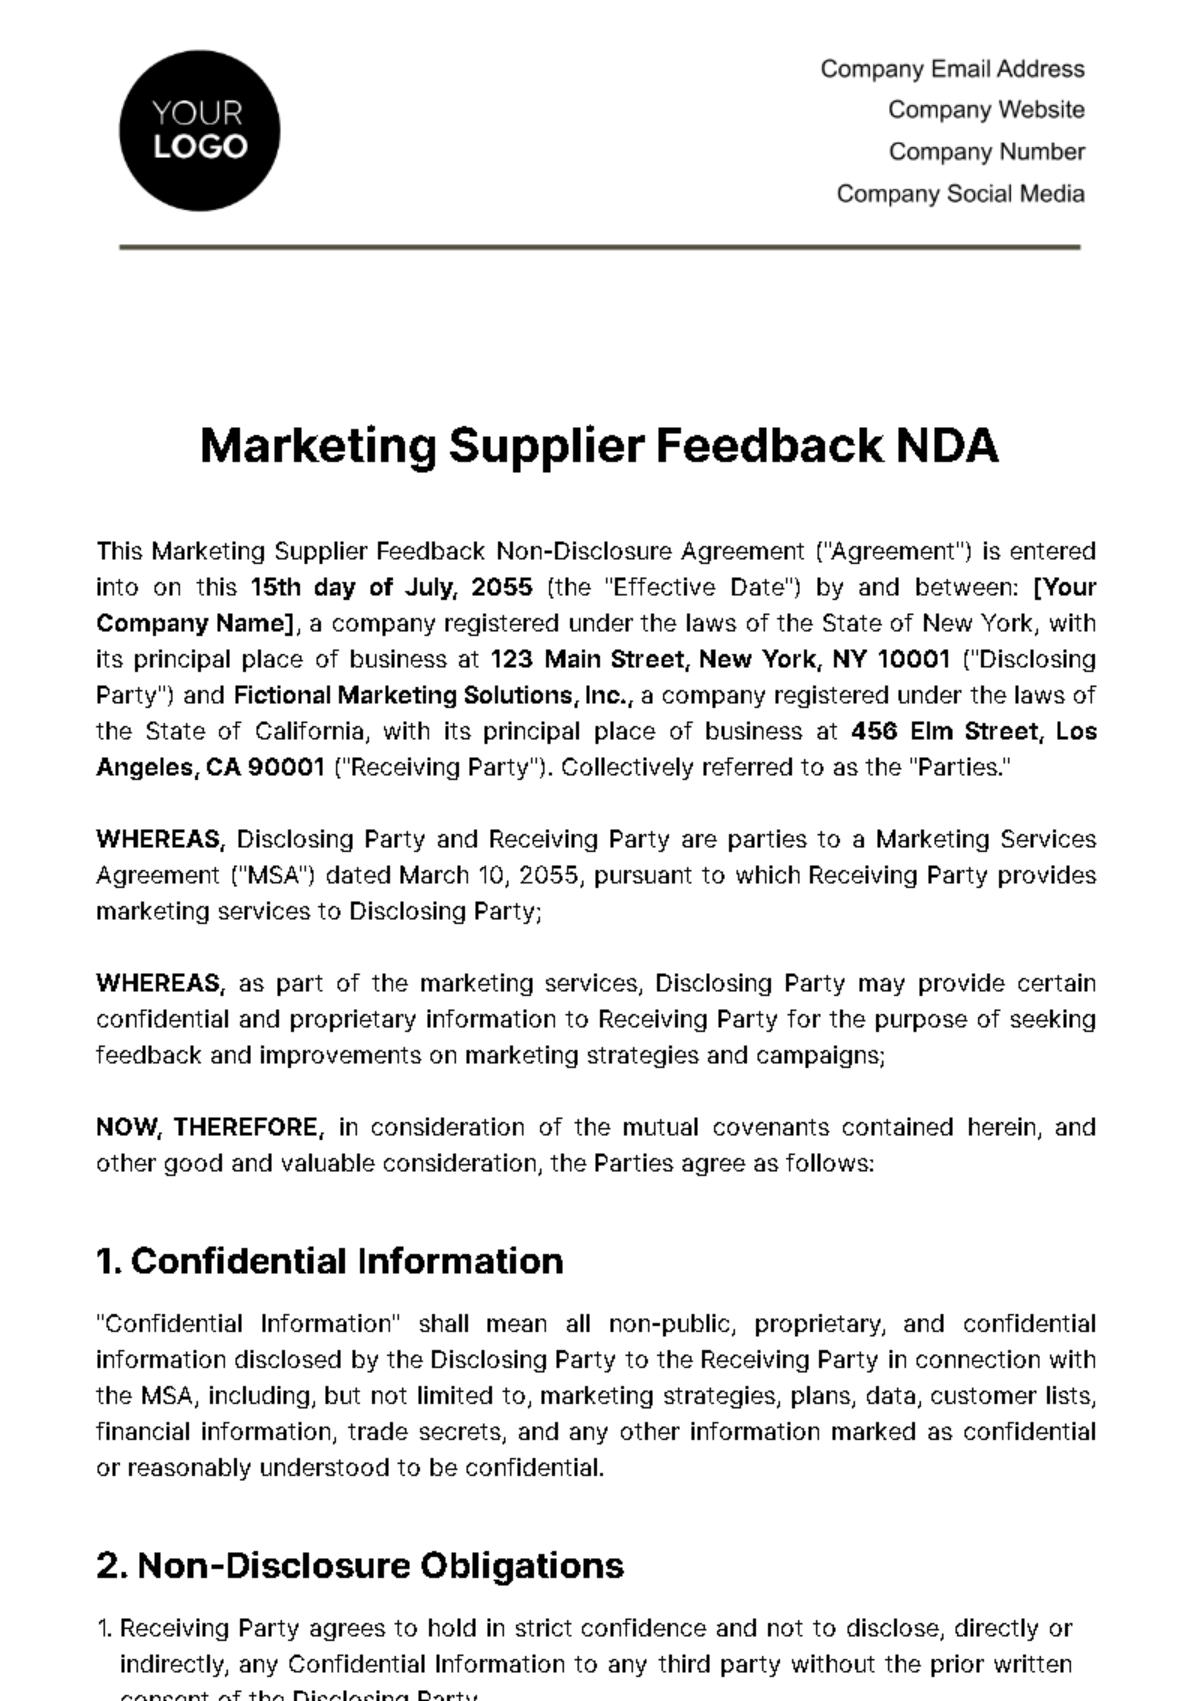 Marketing Supplier Feedback NDA Template